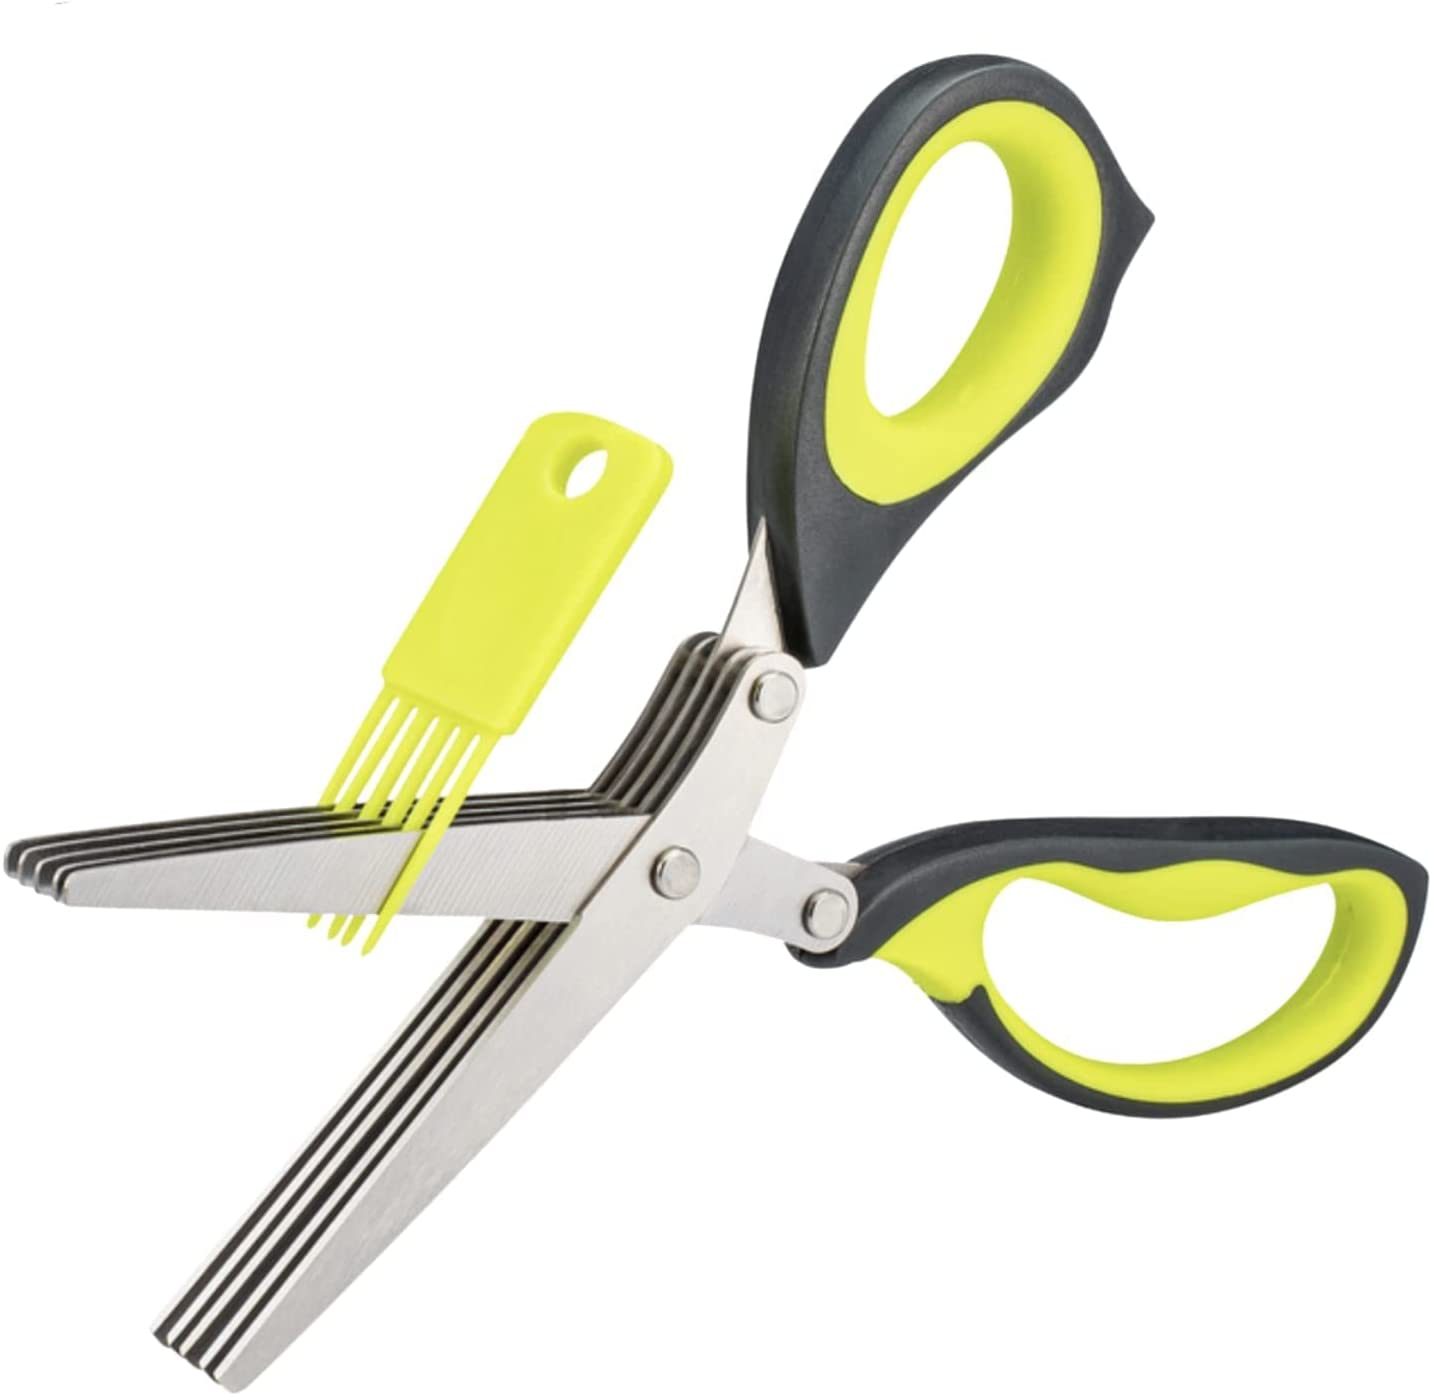 Herb Scissors with 5 Blades - Herb Cutter,Chopper - Shredder Scissors